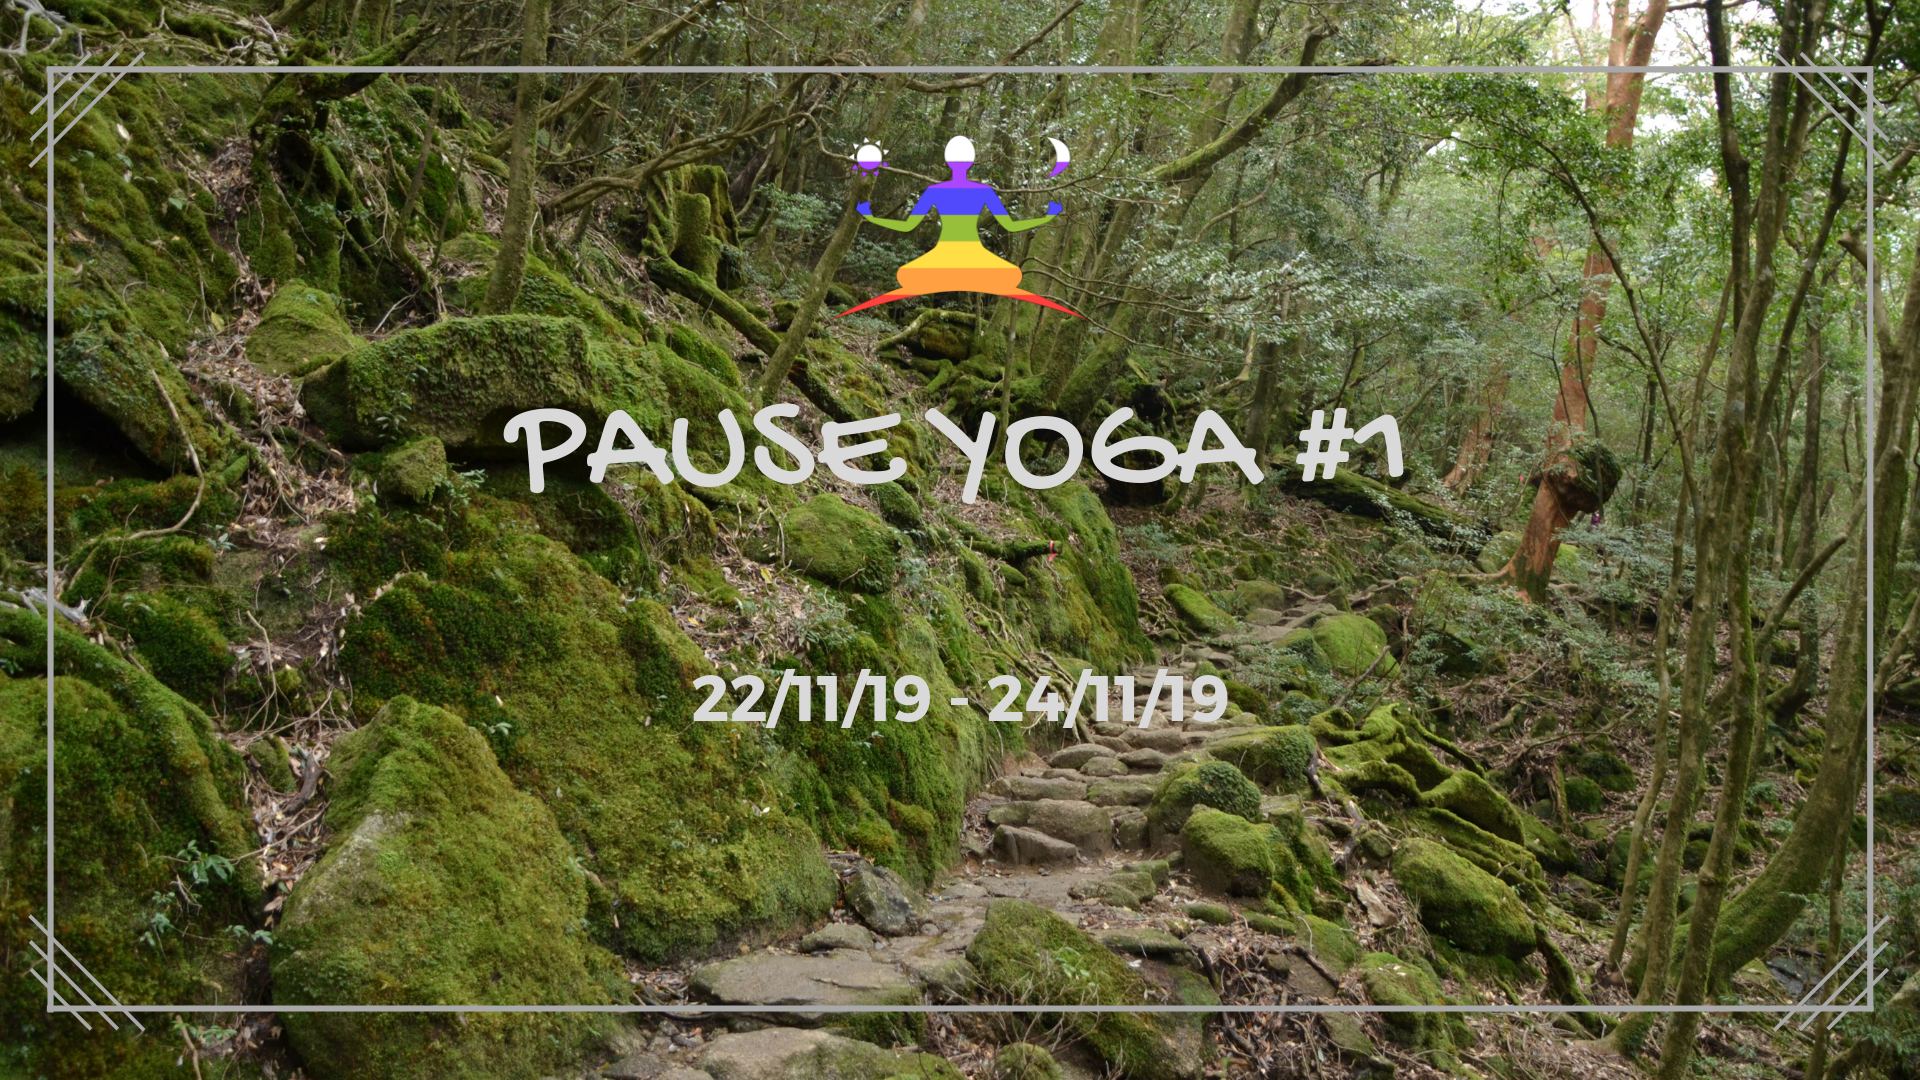 Pause Yoga #1